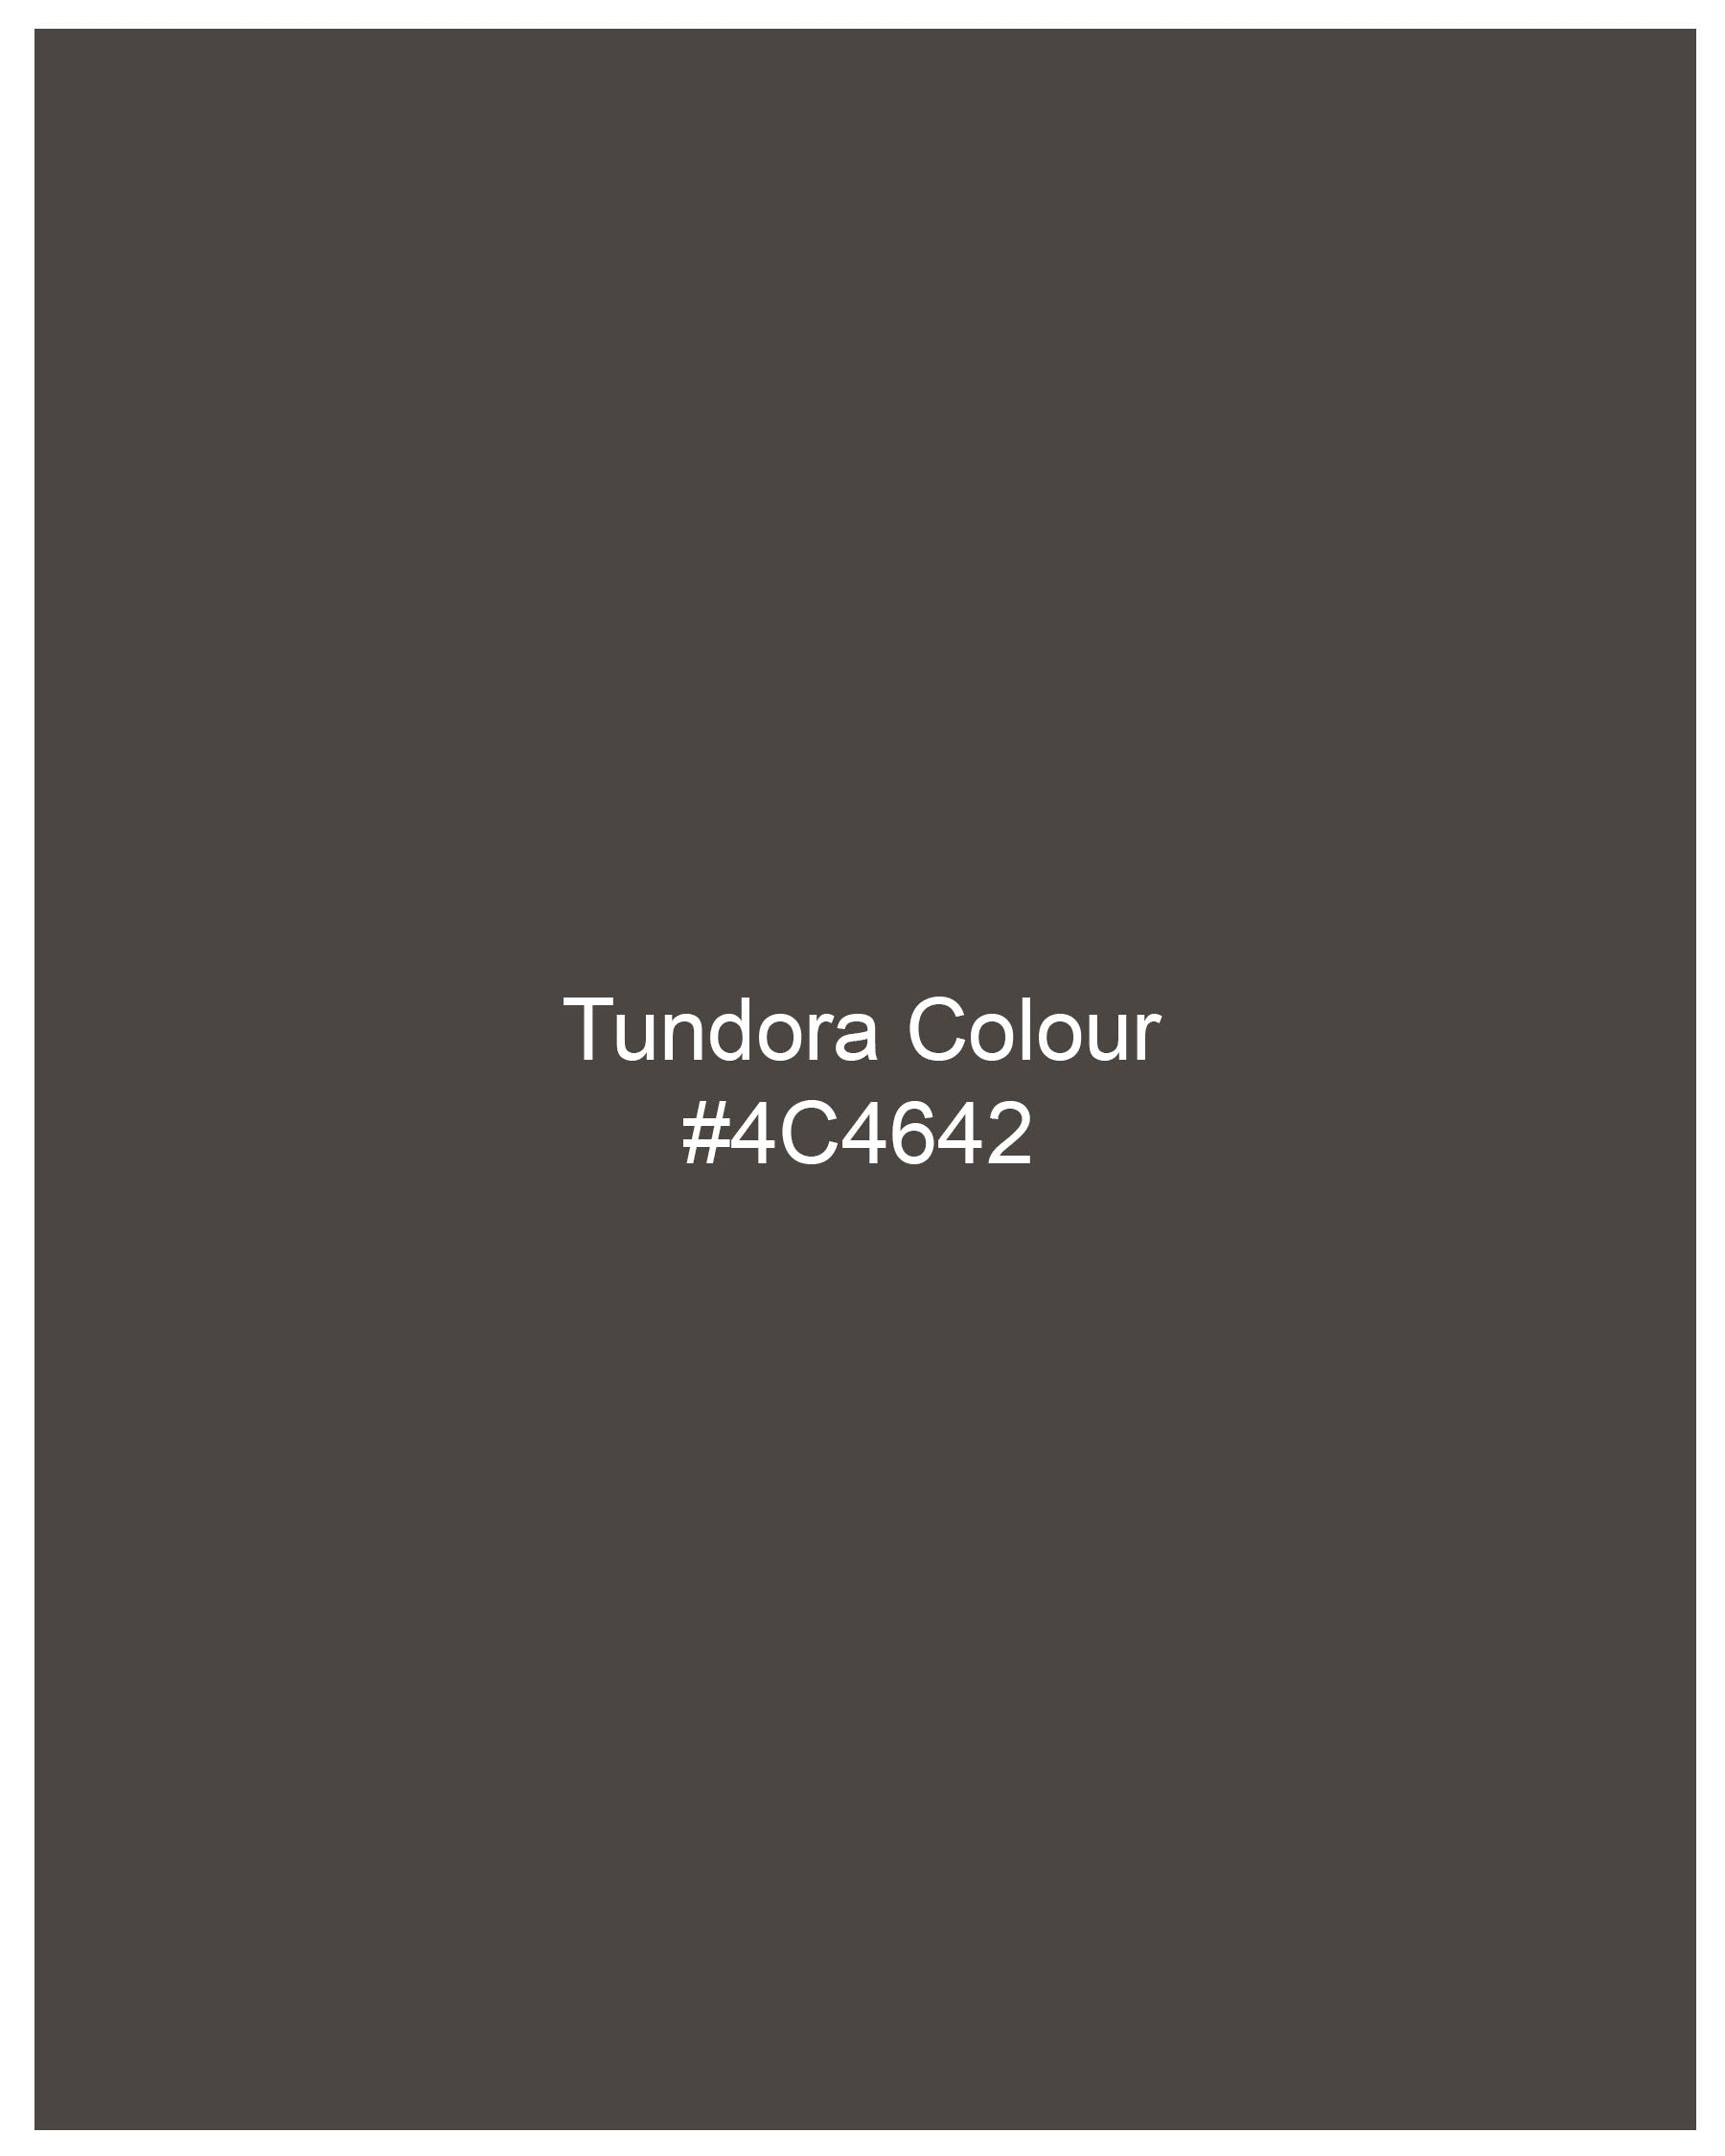 Tundora Gray Acid Washed Stretchable Denim J158-32, J158-34, J158-36, J158-38, J158-40